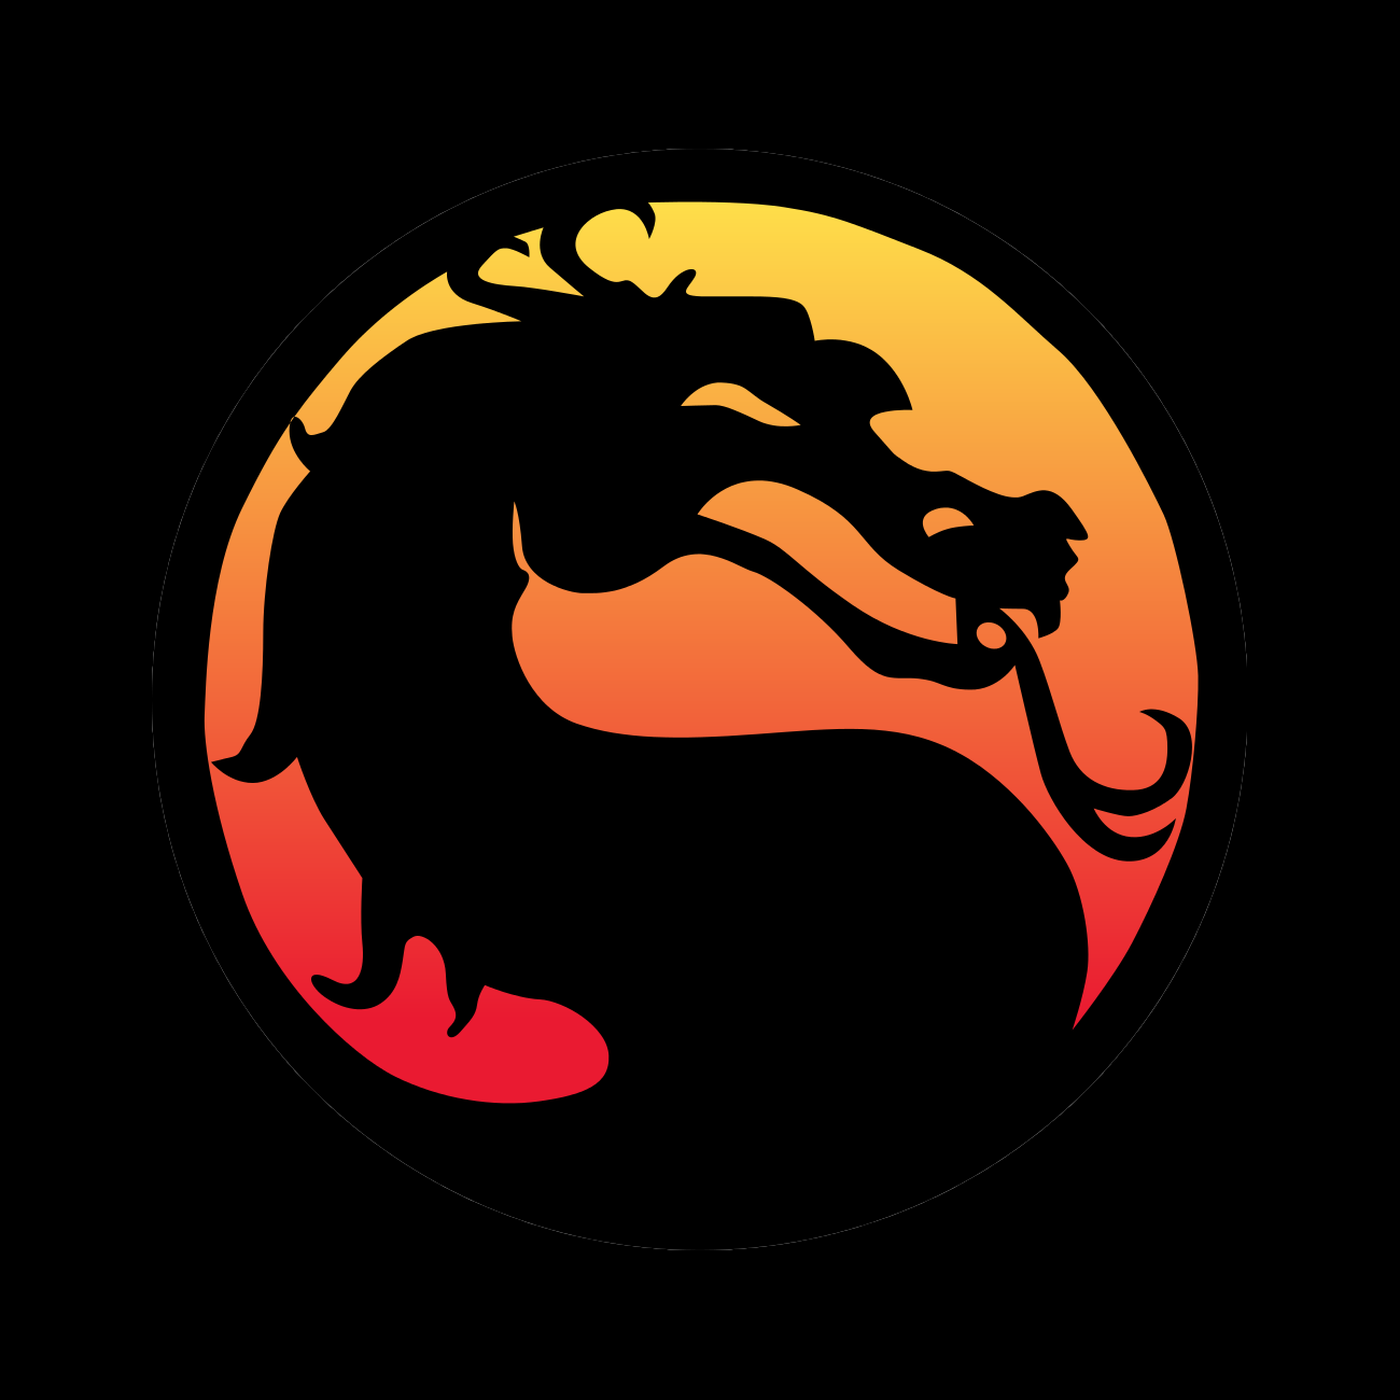 Mortal Kombat movie reboot will be rated R